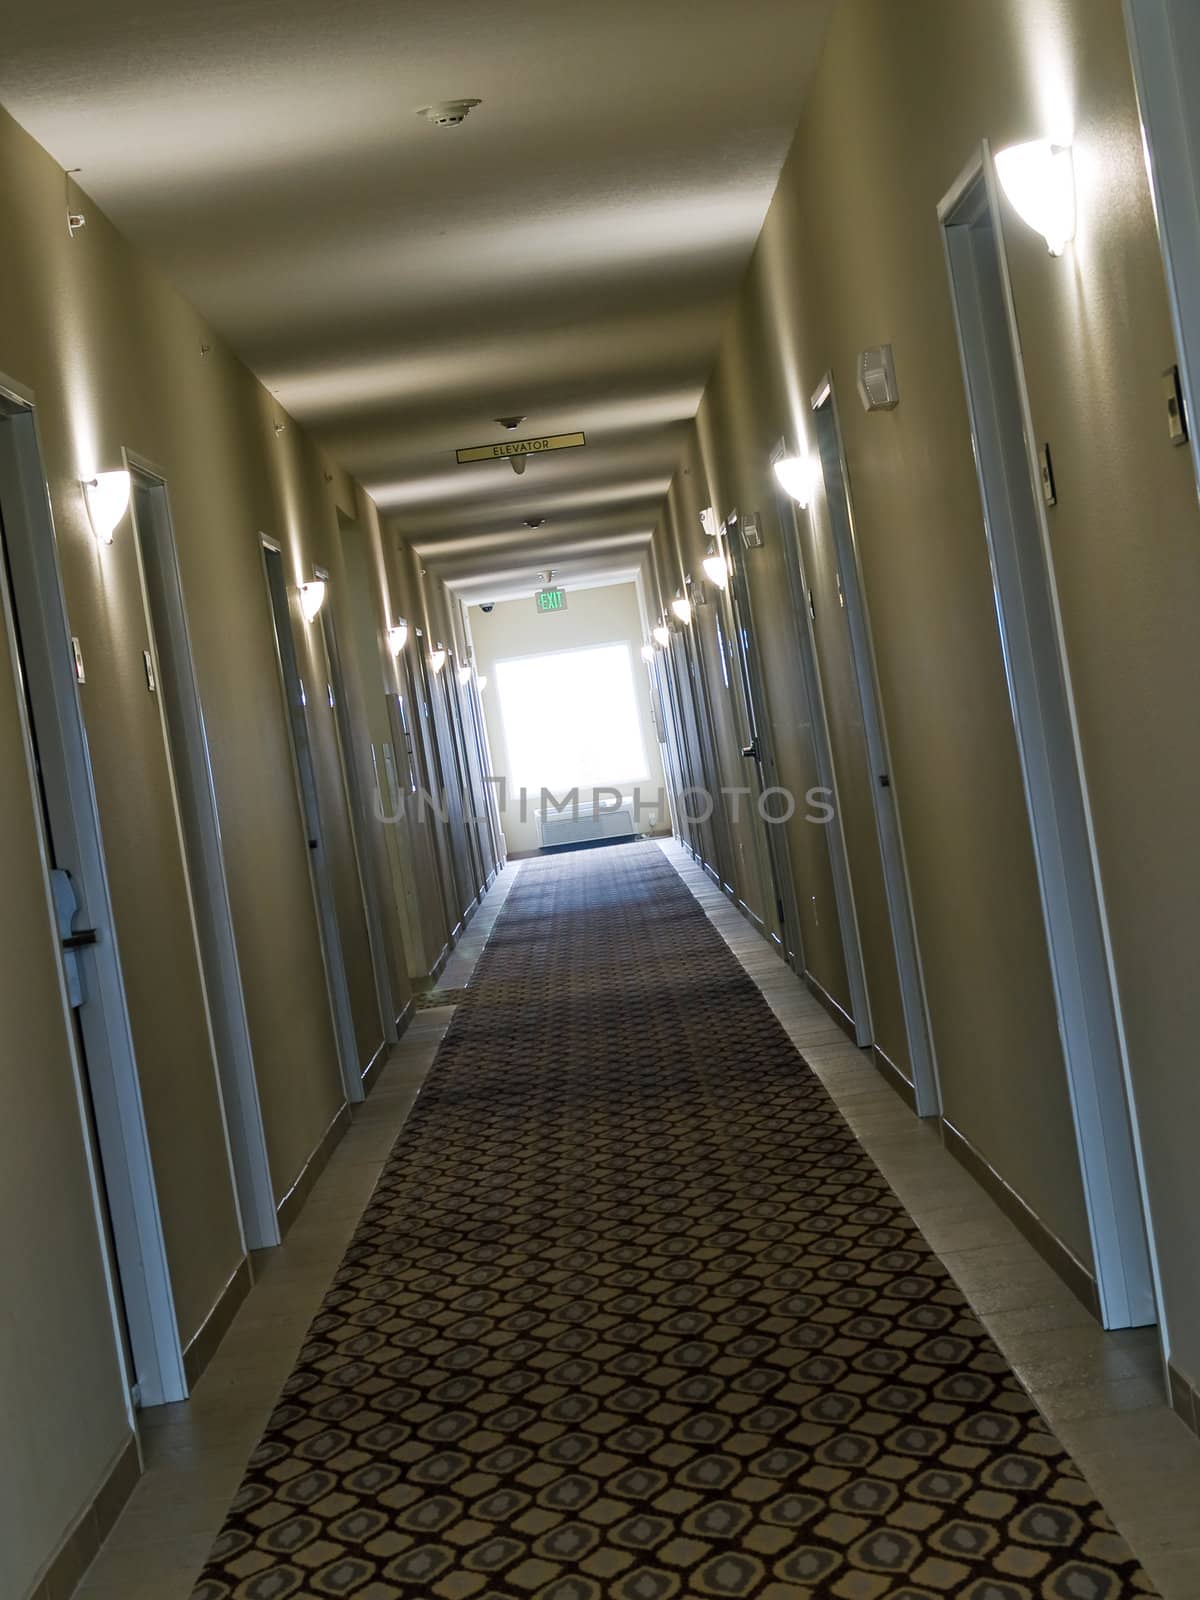 Empty, crooked hotel corridor in monochrome sepia color tone by Frankljunior